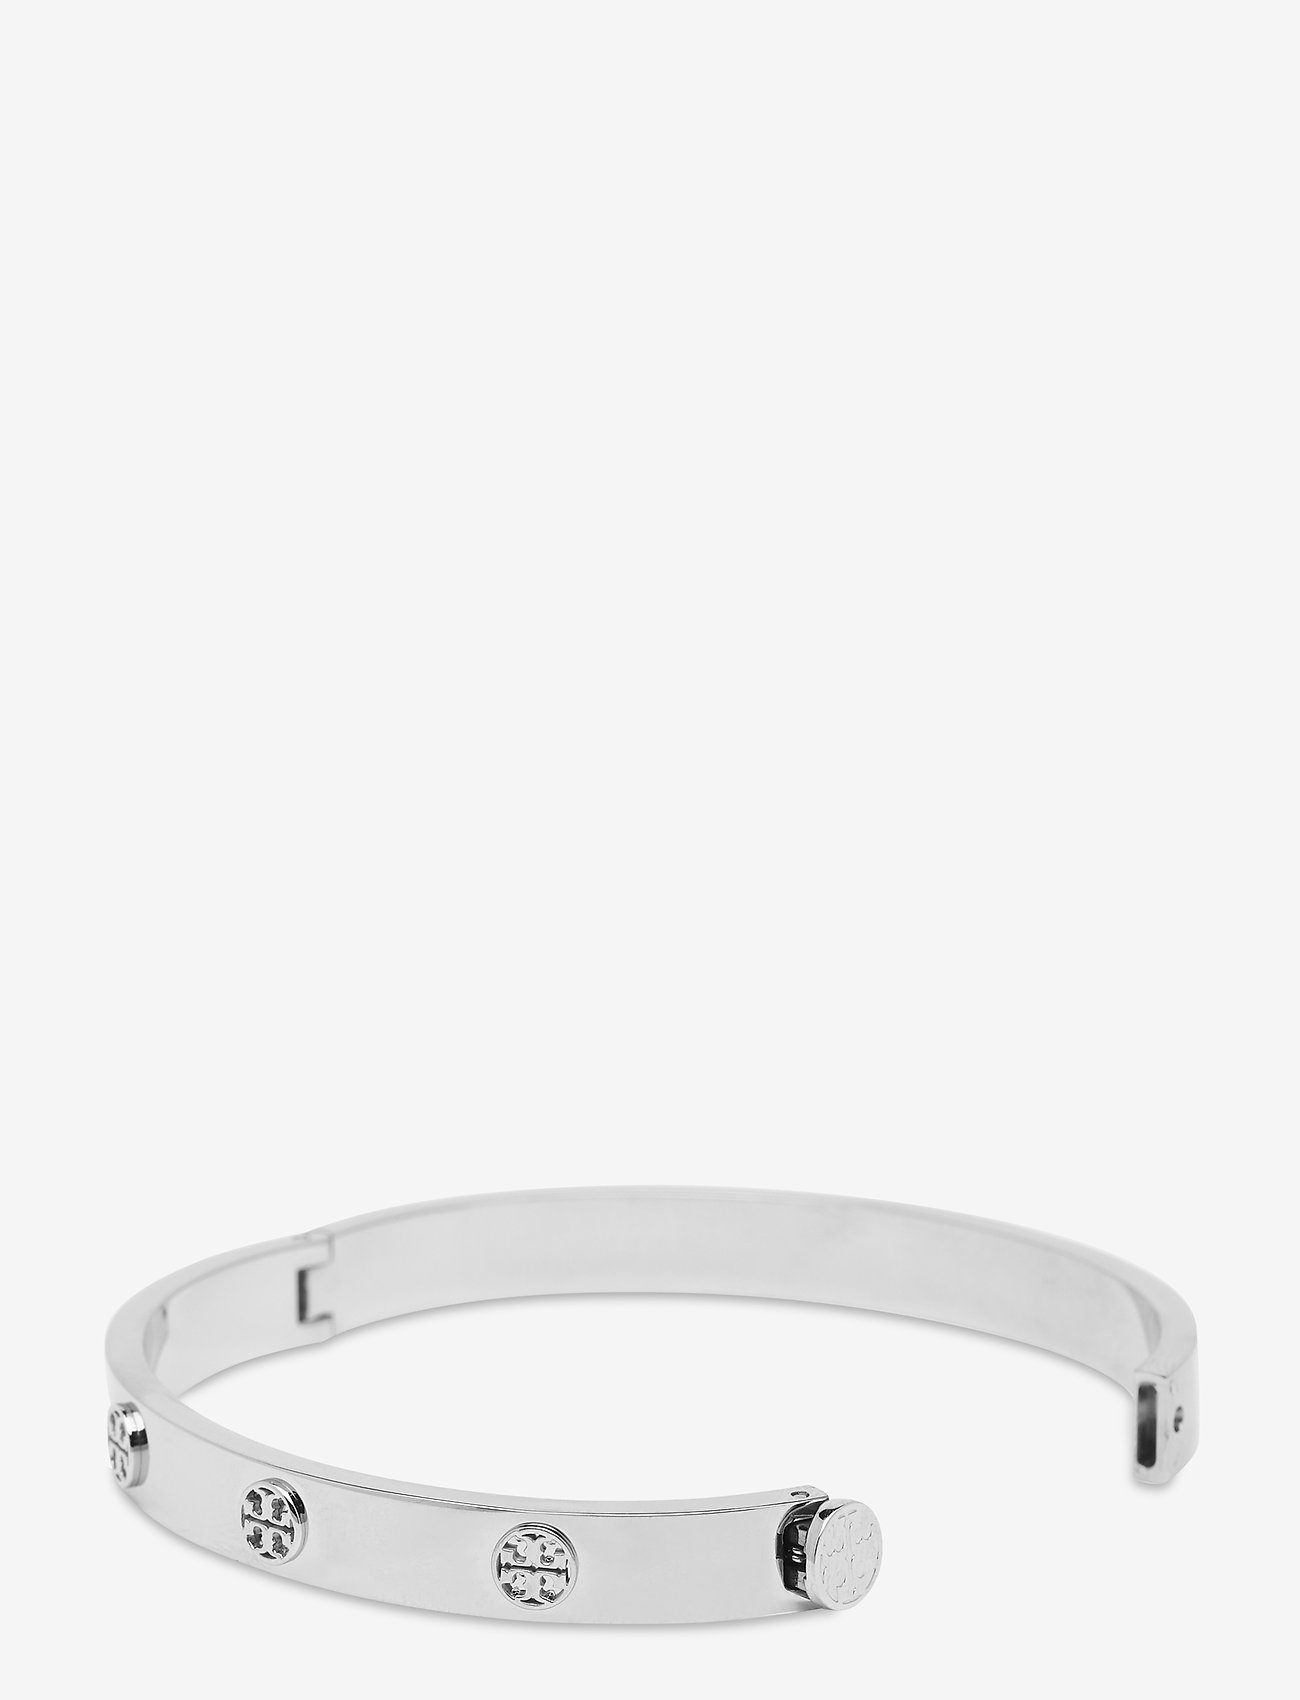 Tory Burch Miller Stud Hinge Bracelet (Tory Gold) - 1469 kr | Boozt.com